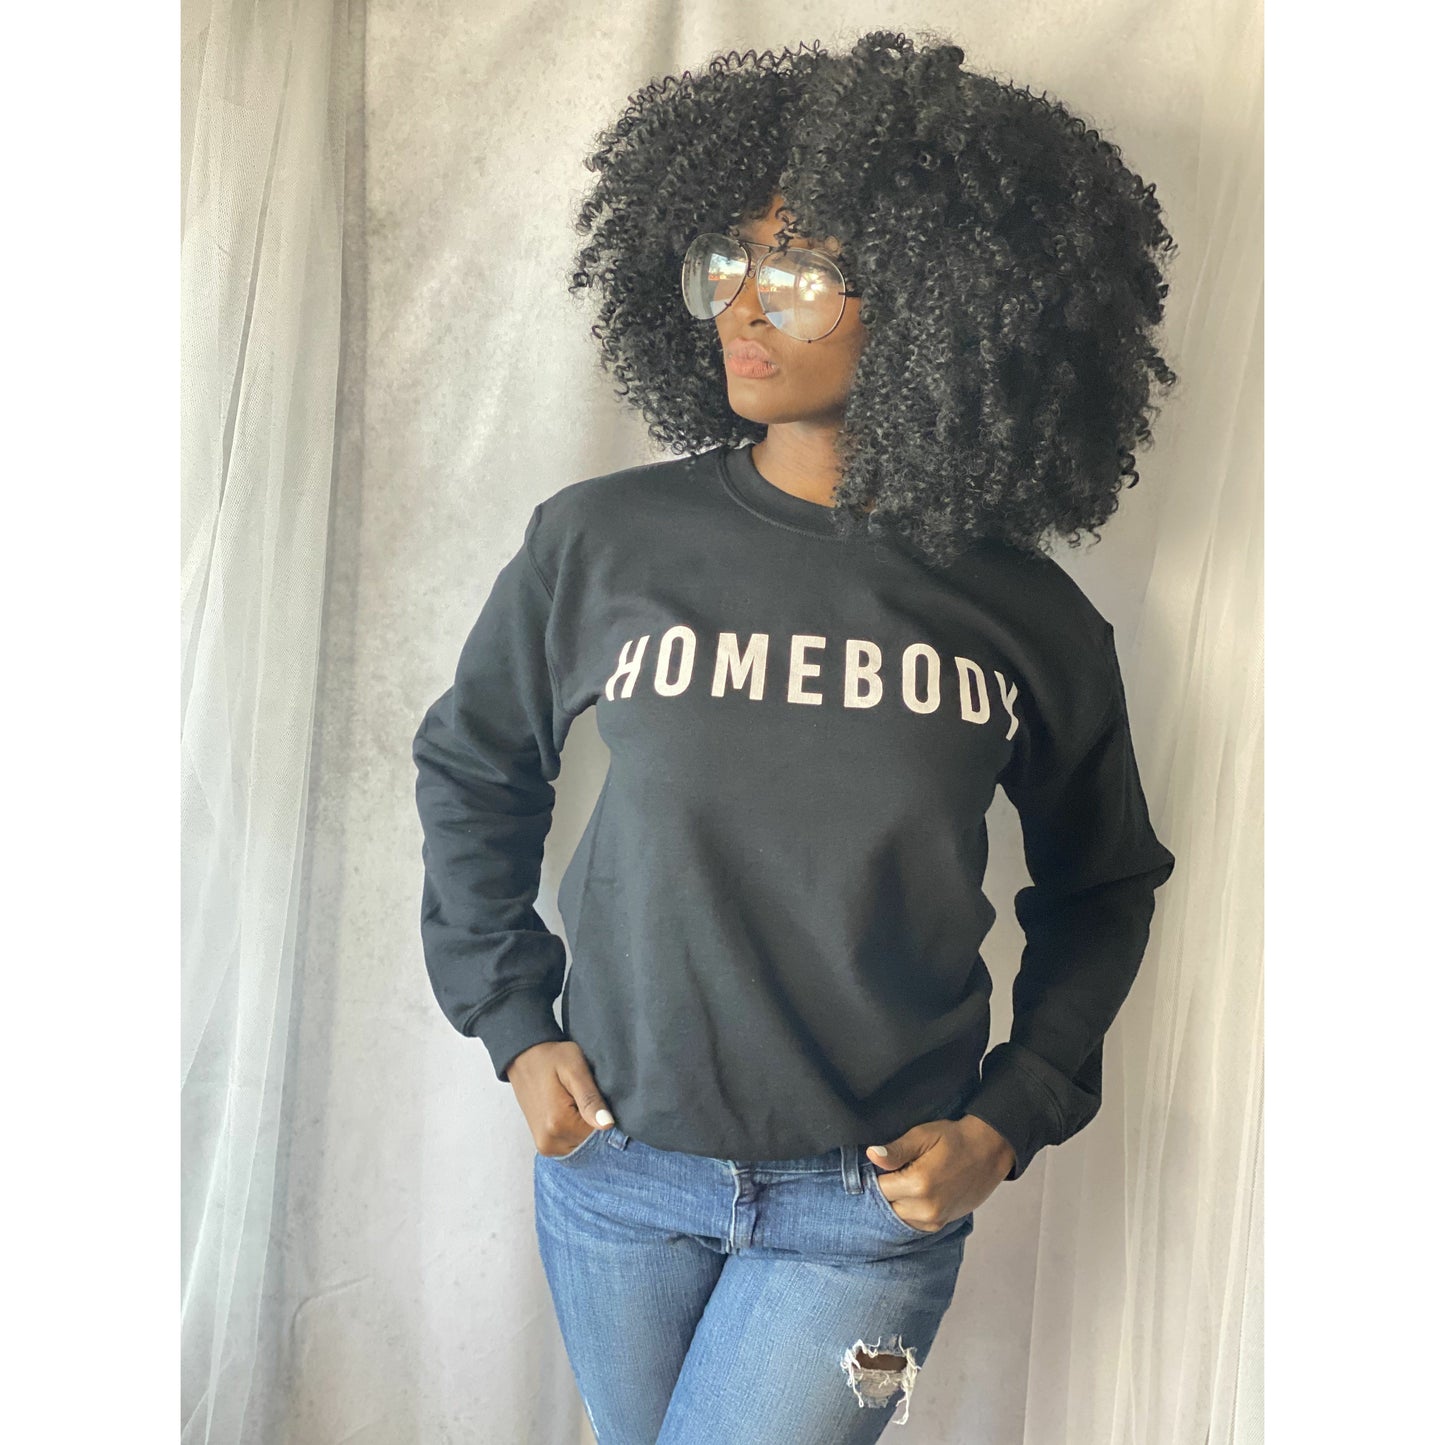 Dim Gray Homebody Sweatshirt (Black)